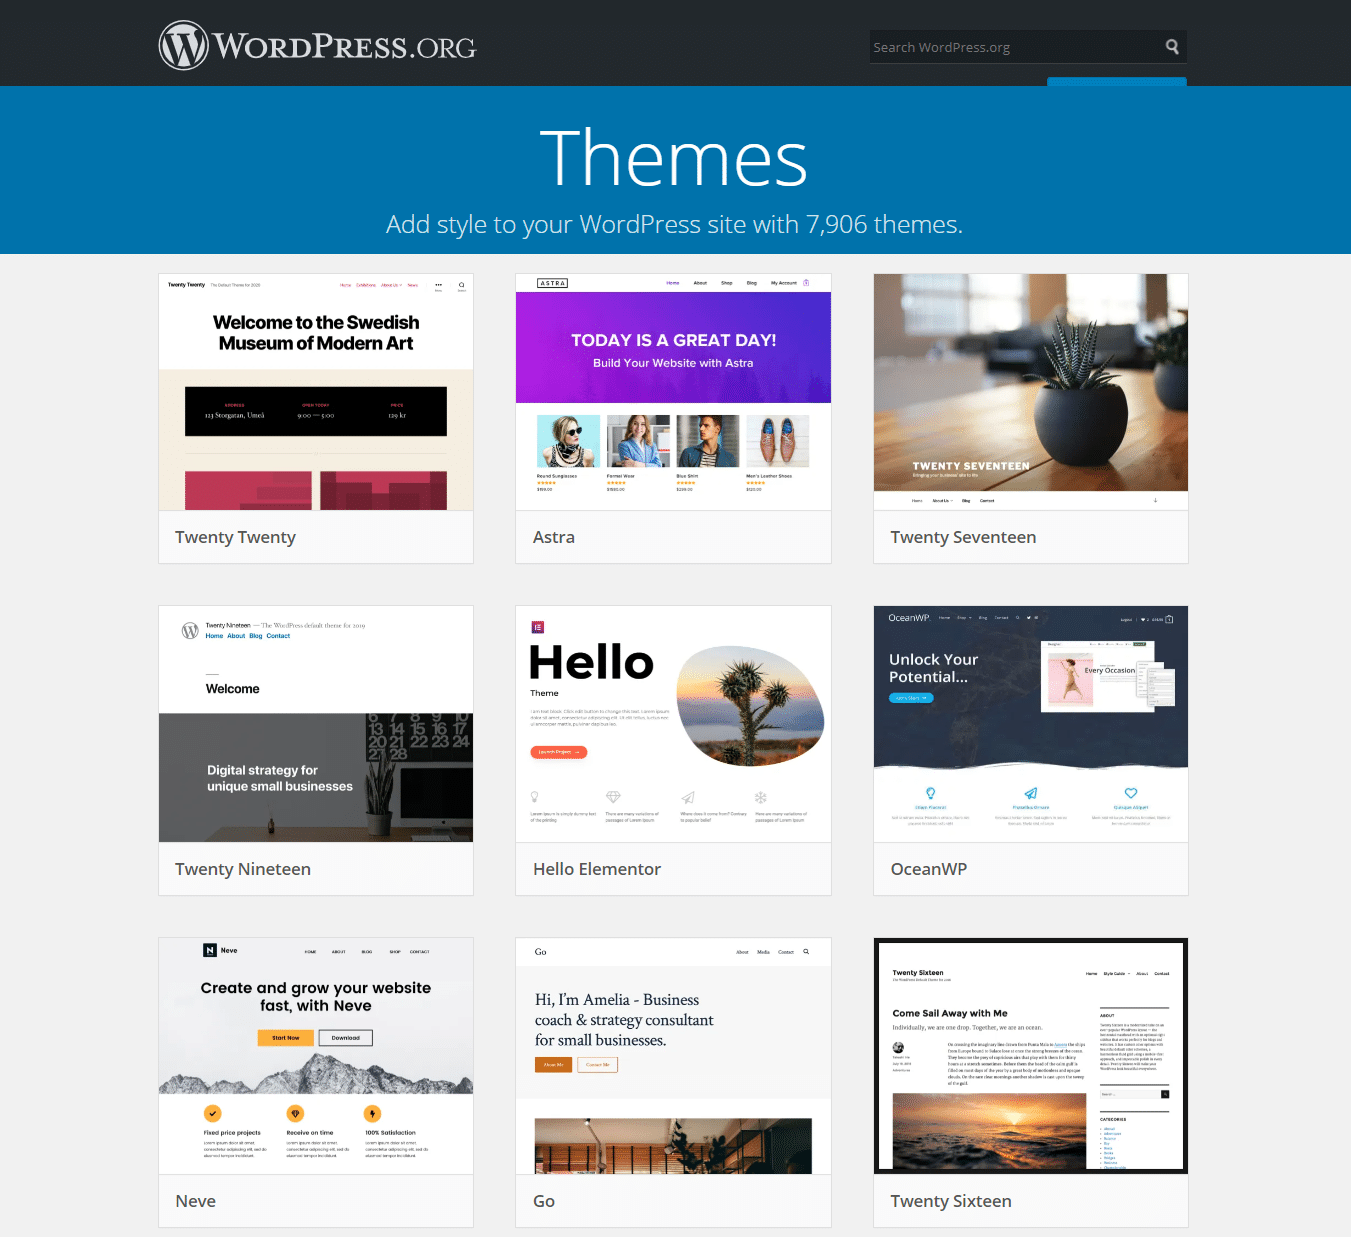 Best WordPress Theme For Designers